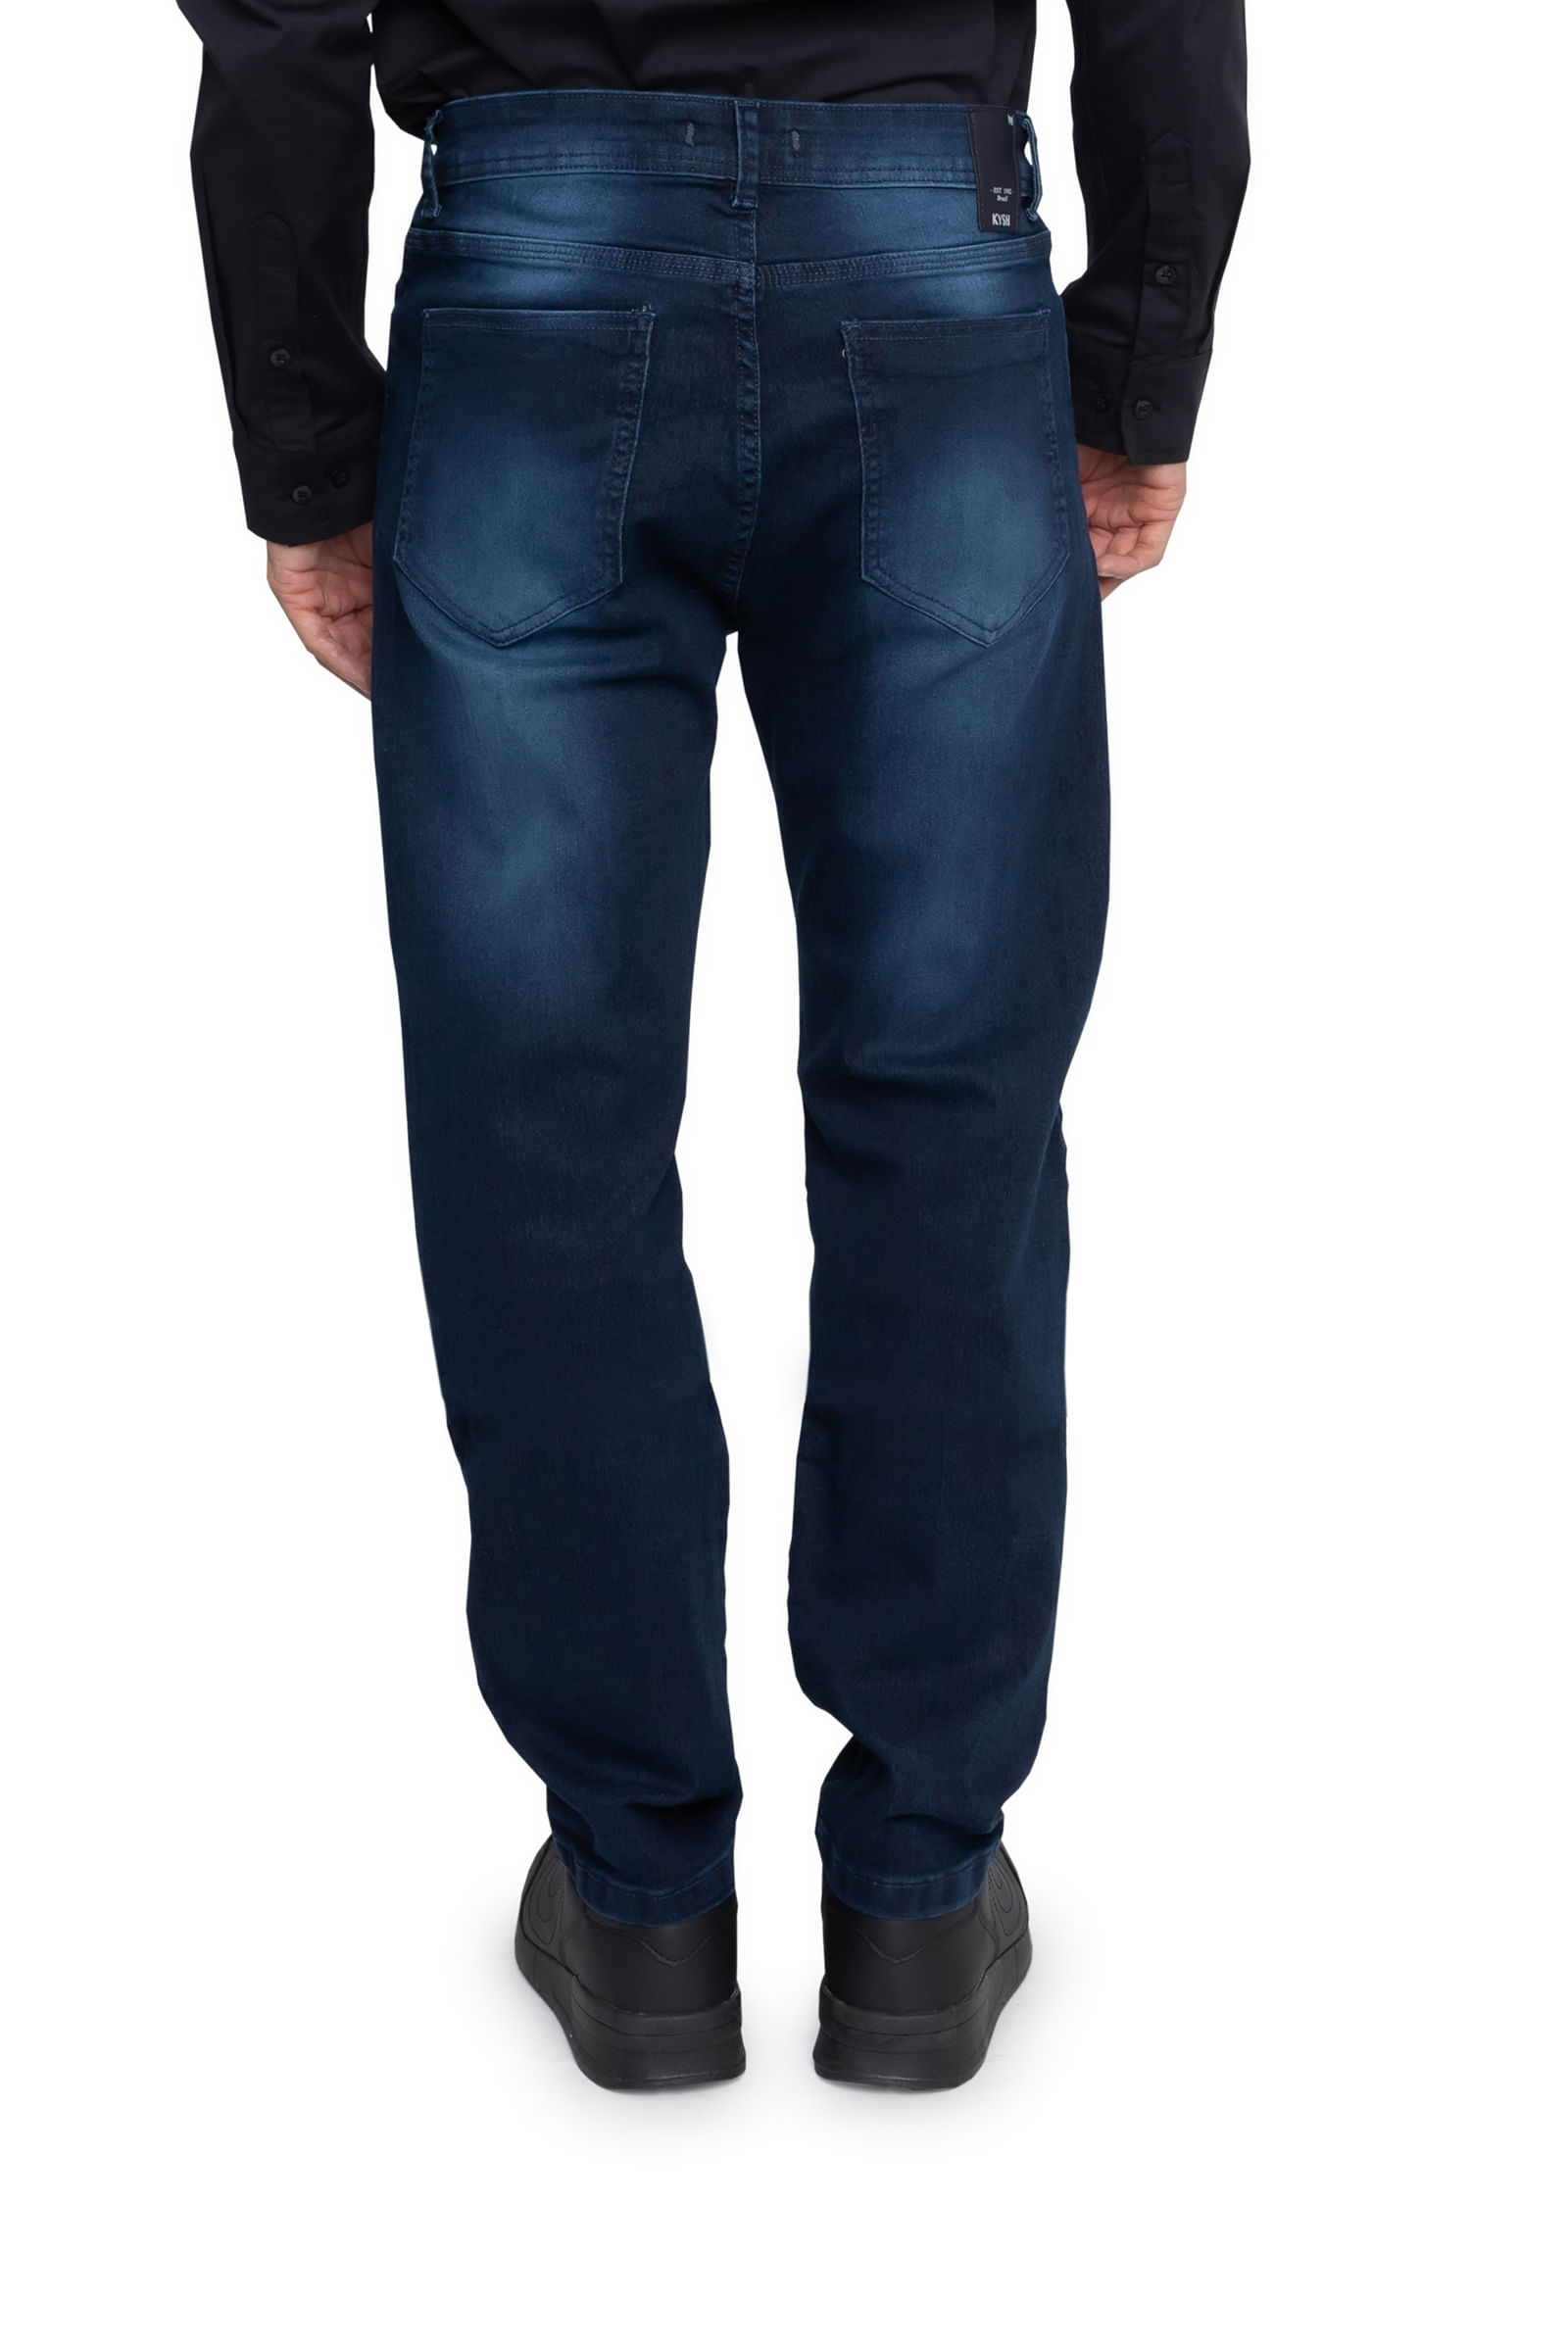 SIMWOOD-COOLMAX Jeans de tecido masculino, secagem rápida